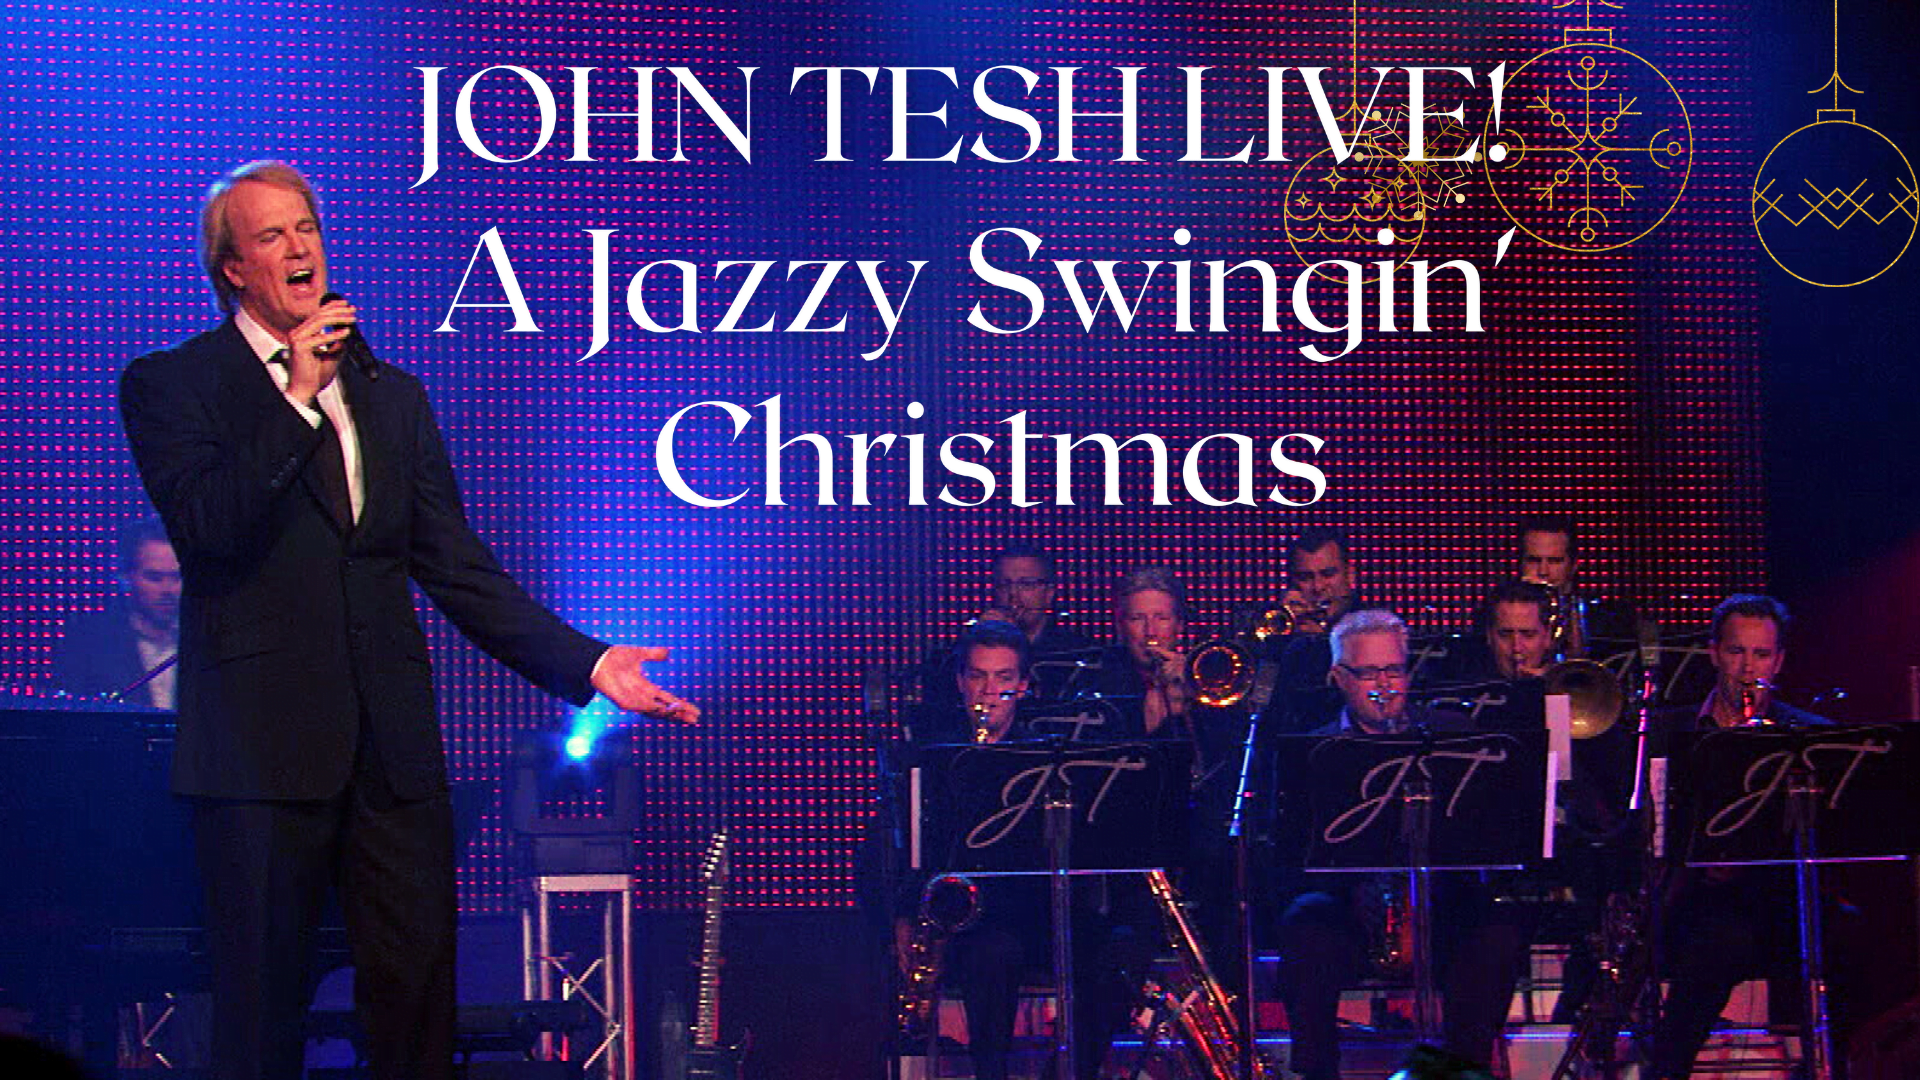 Flier for John Tesh Jazzy Christmas at Paramount Hudson Valley